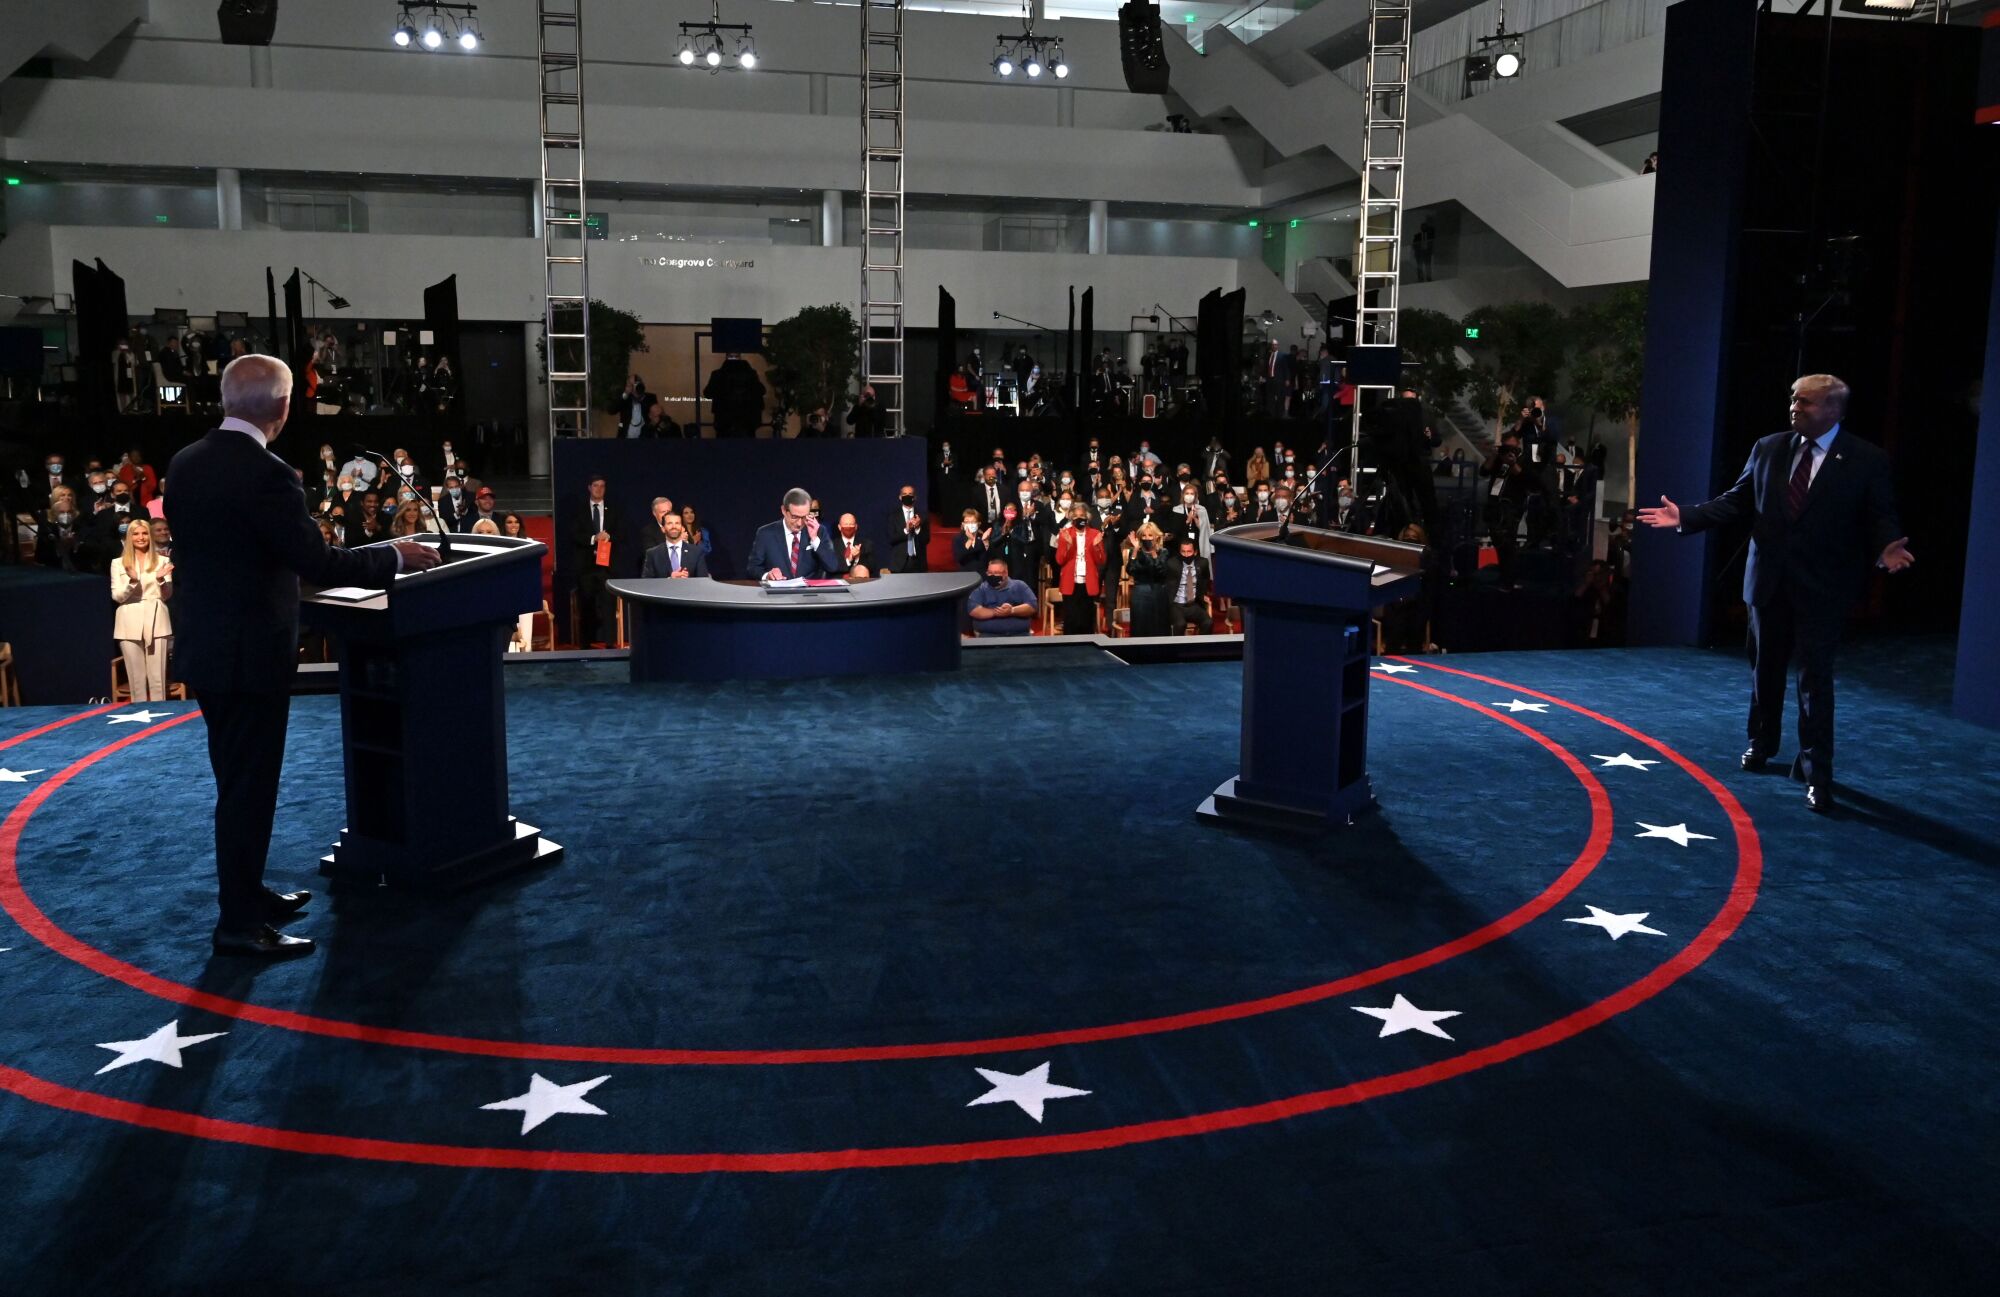 Joe Biden and President Trump on the debate stage